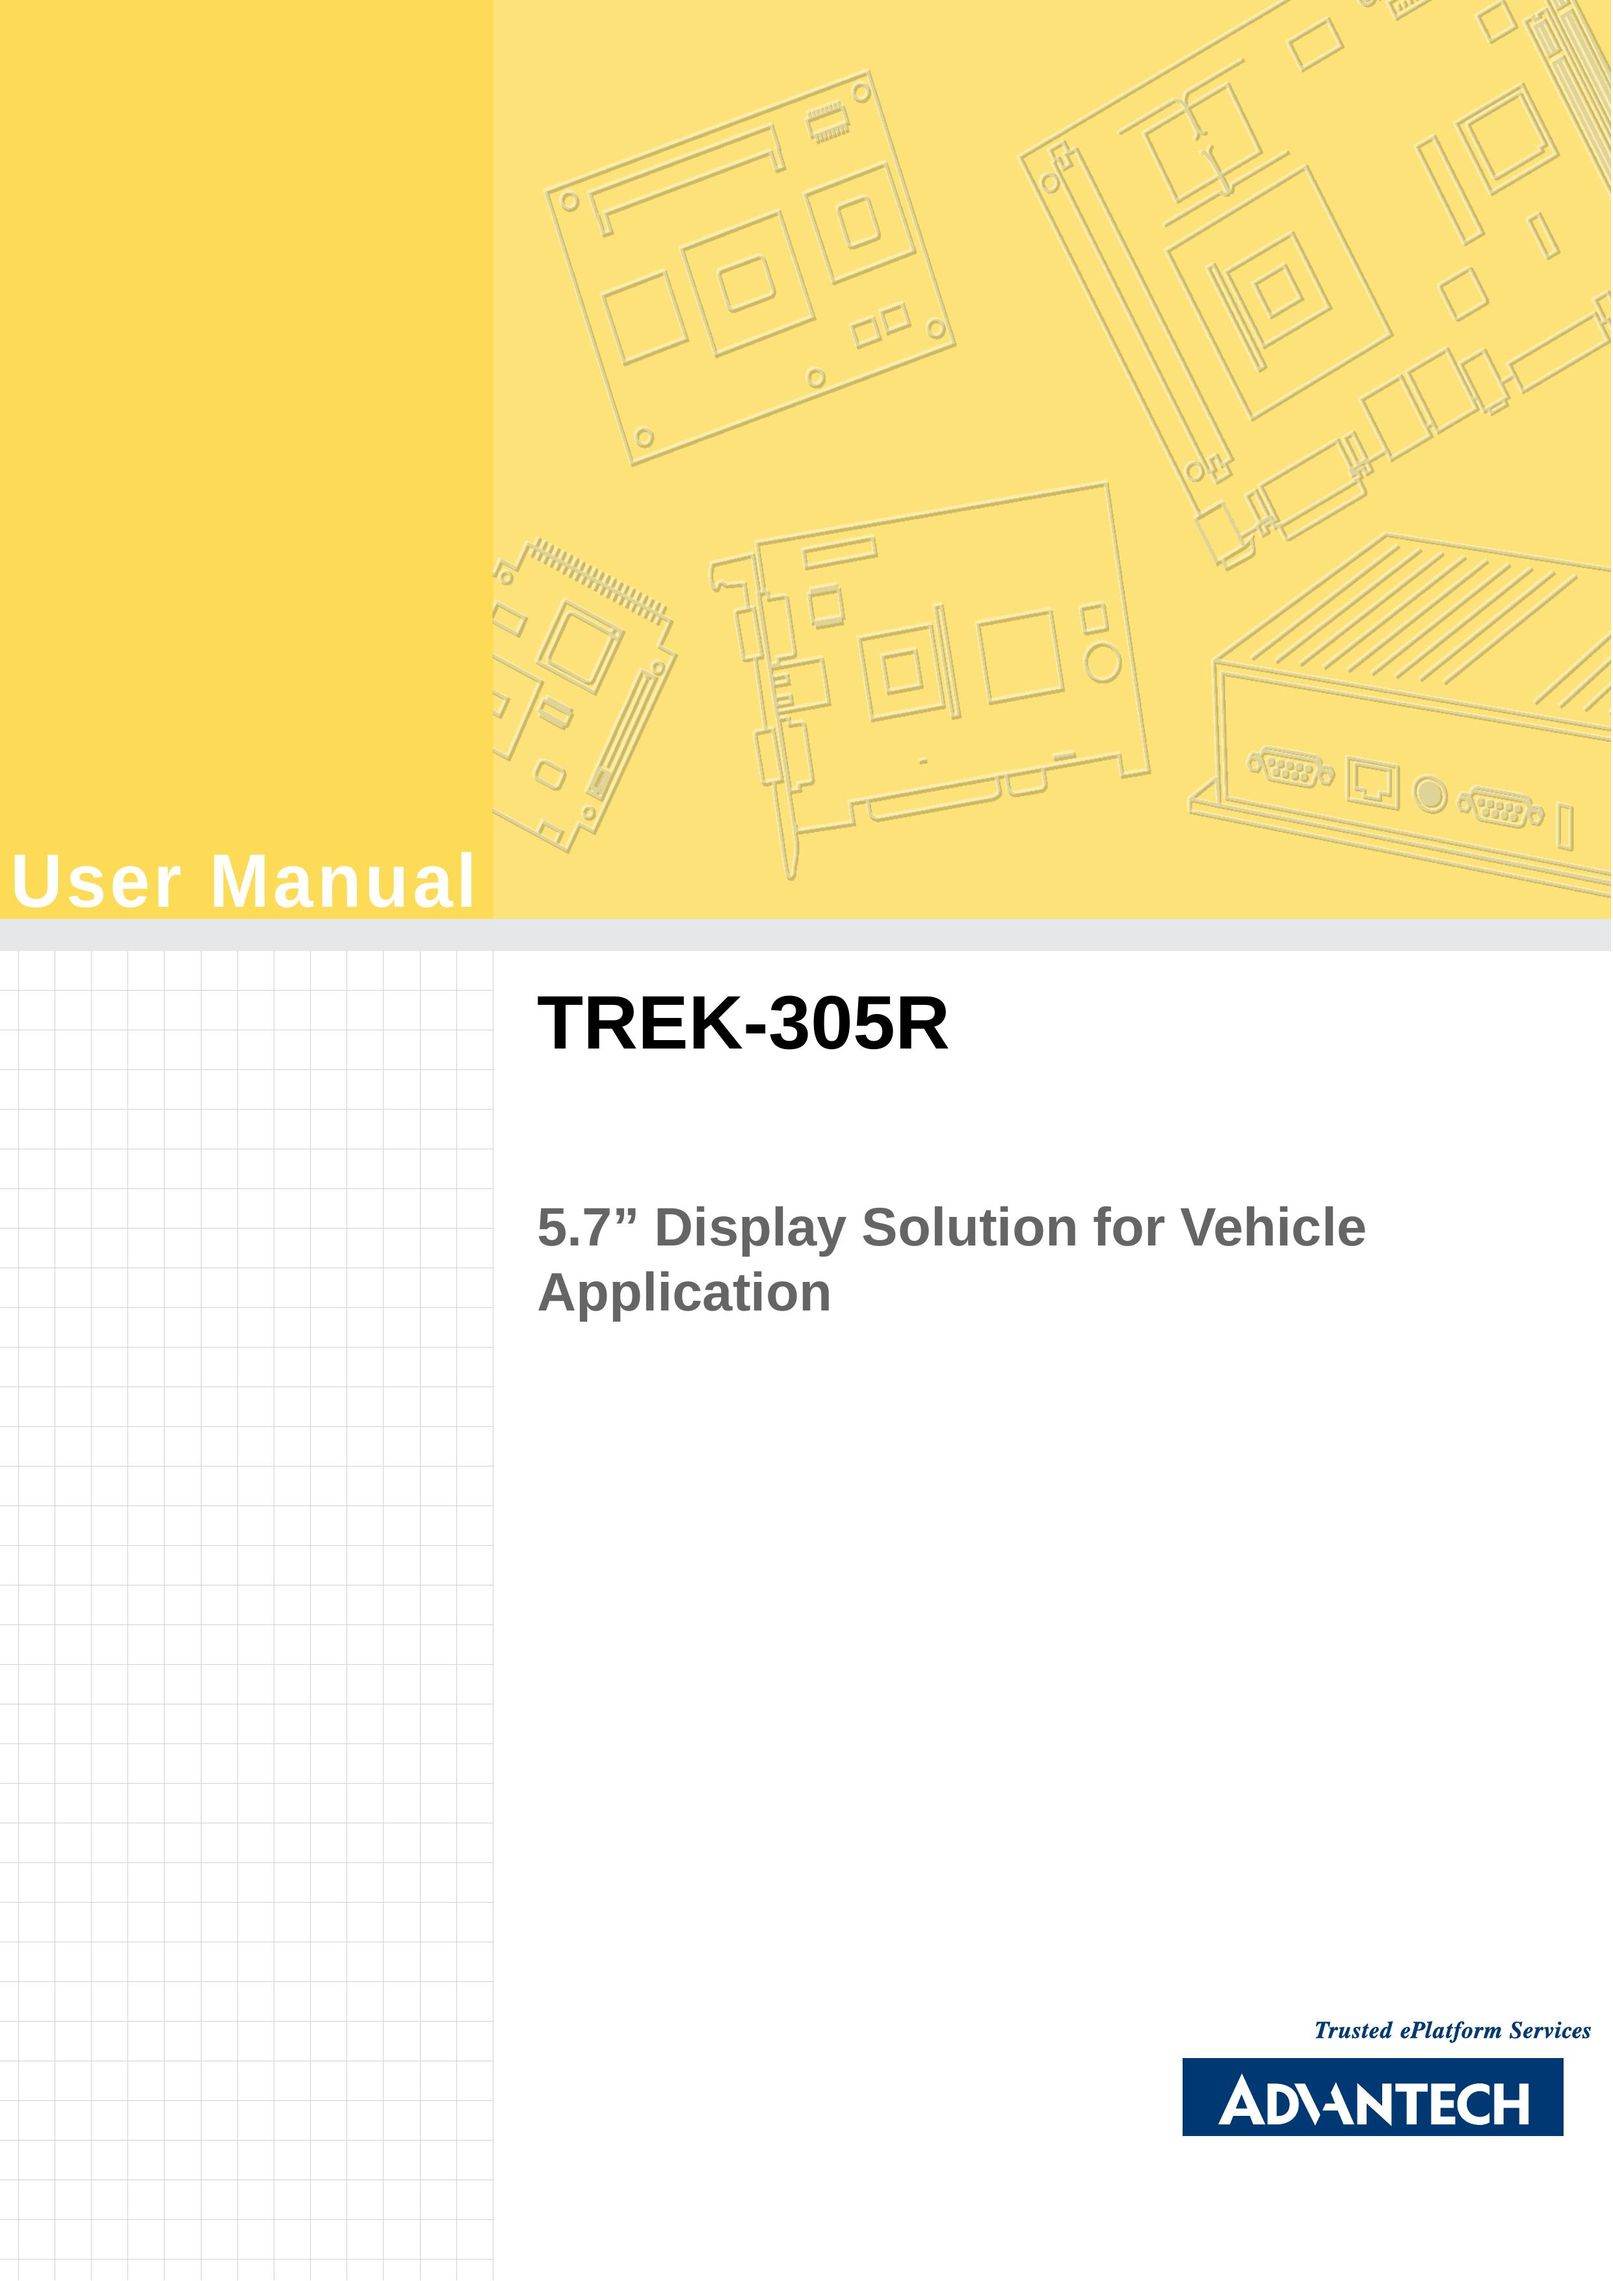 Advantech TREK-305R Car Video System User Manual